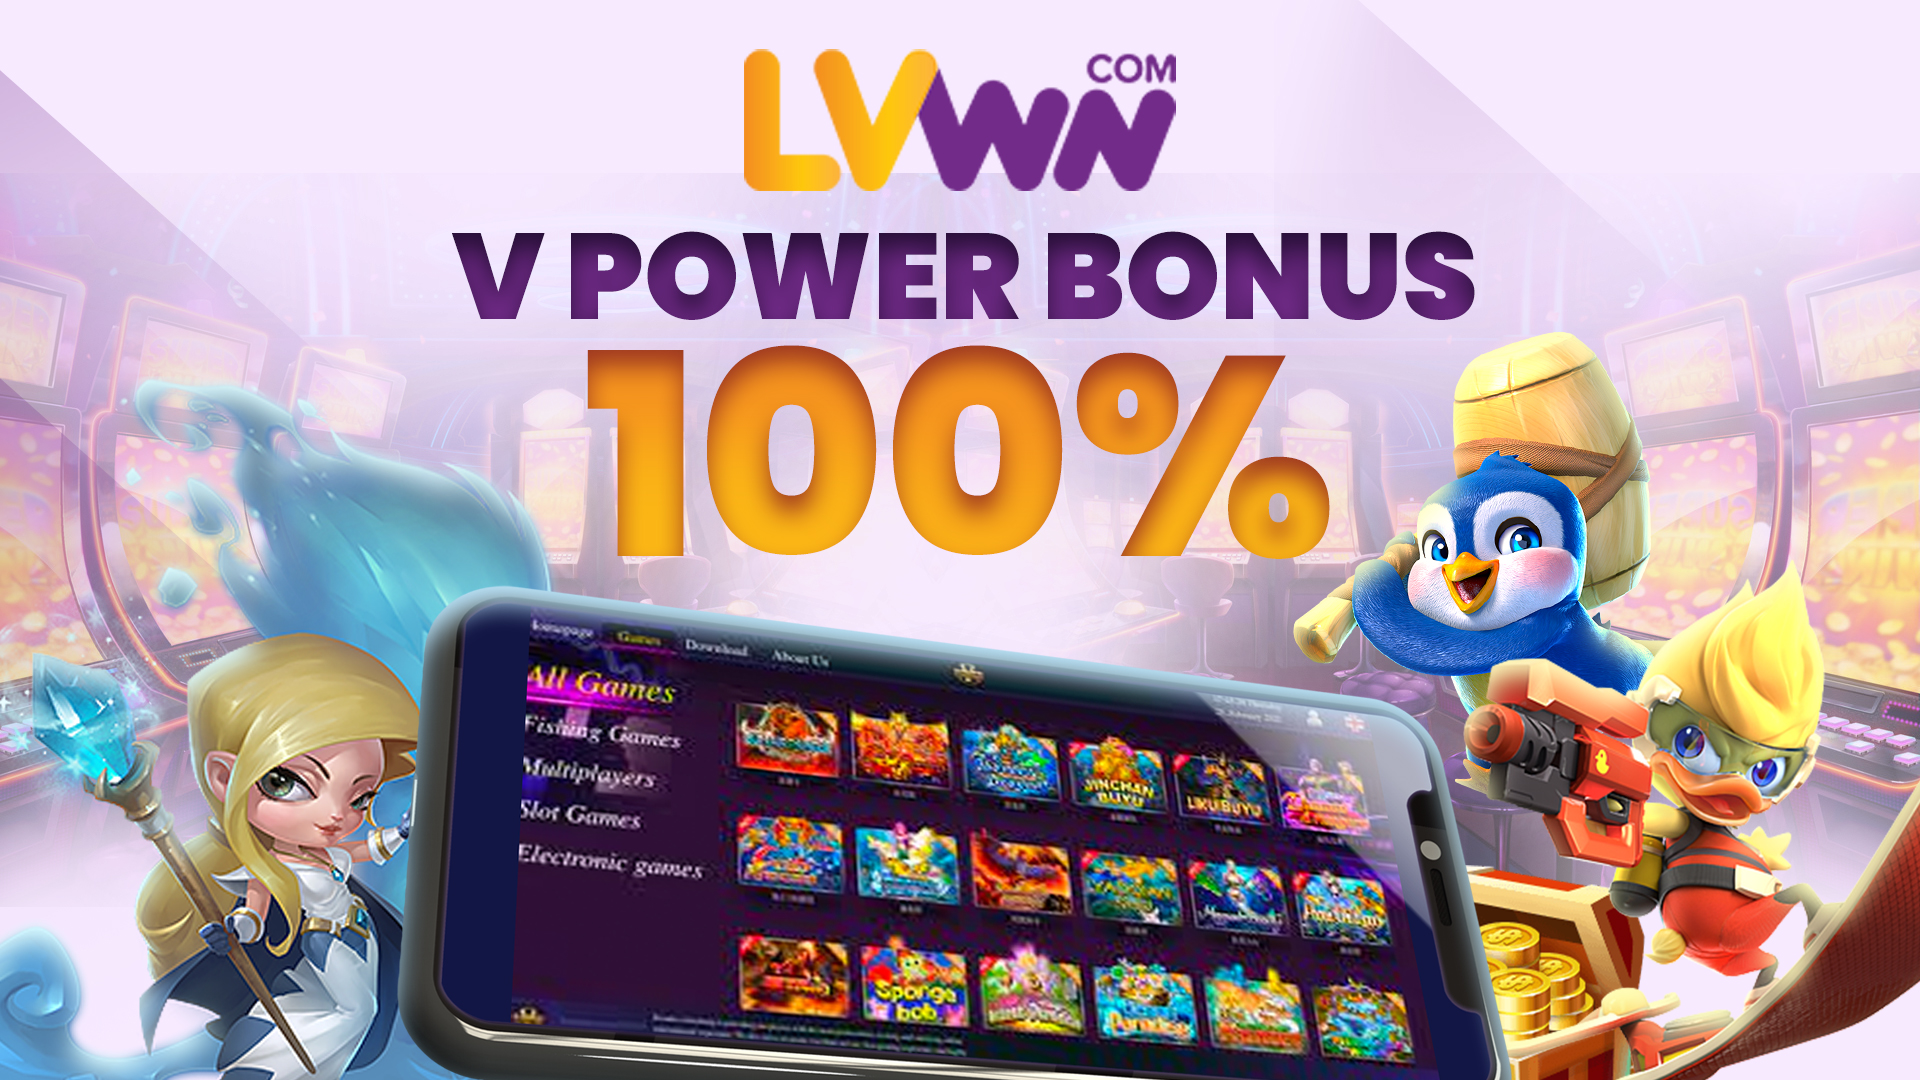 vpower 100% bonus